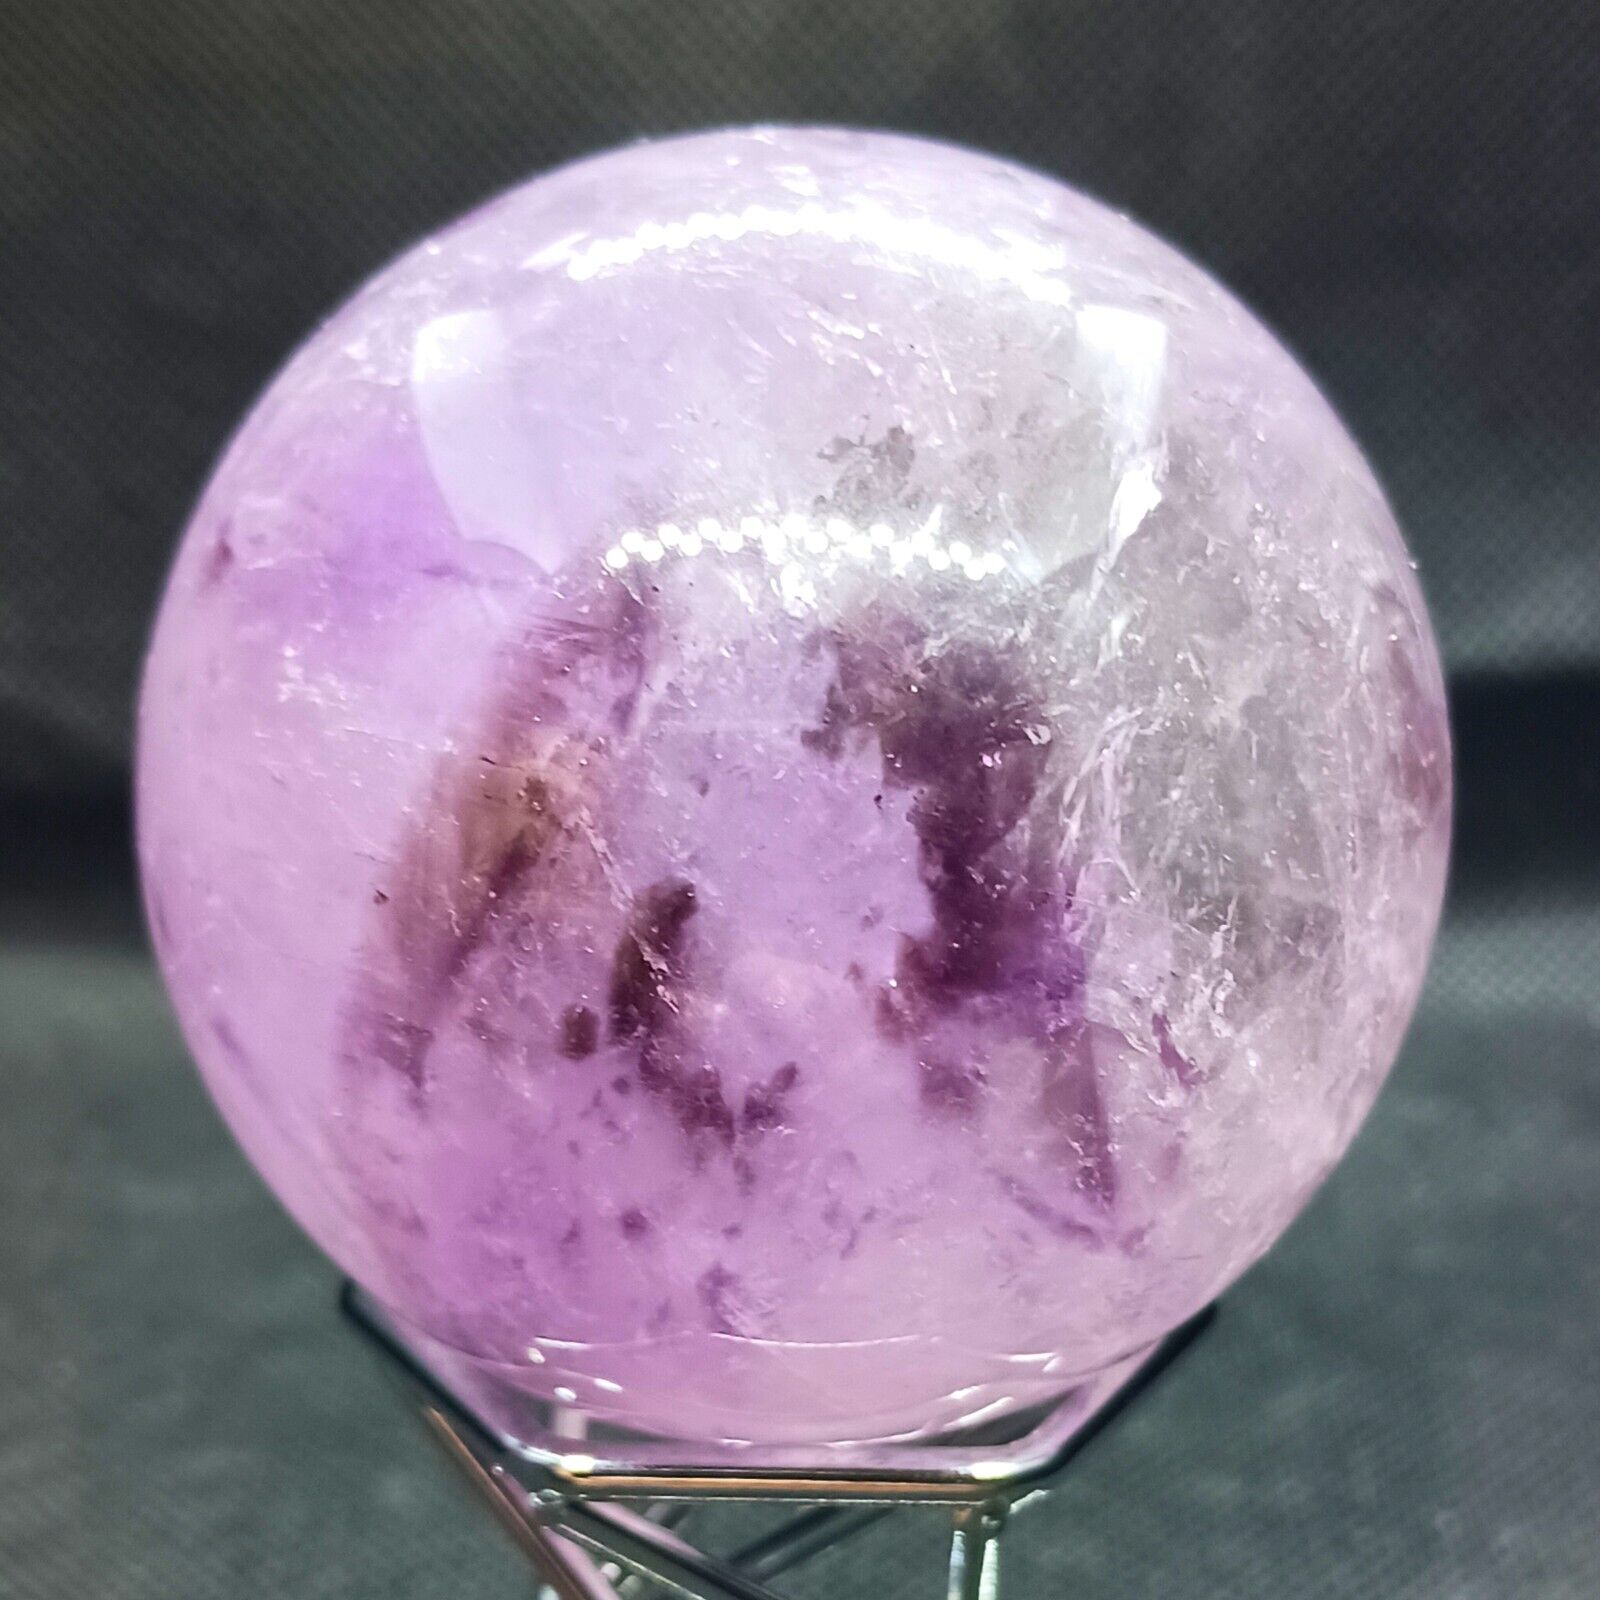 Amethyst sphere with purple phantoms  large polished amethyst crystal sphere 